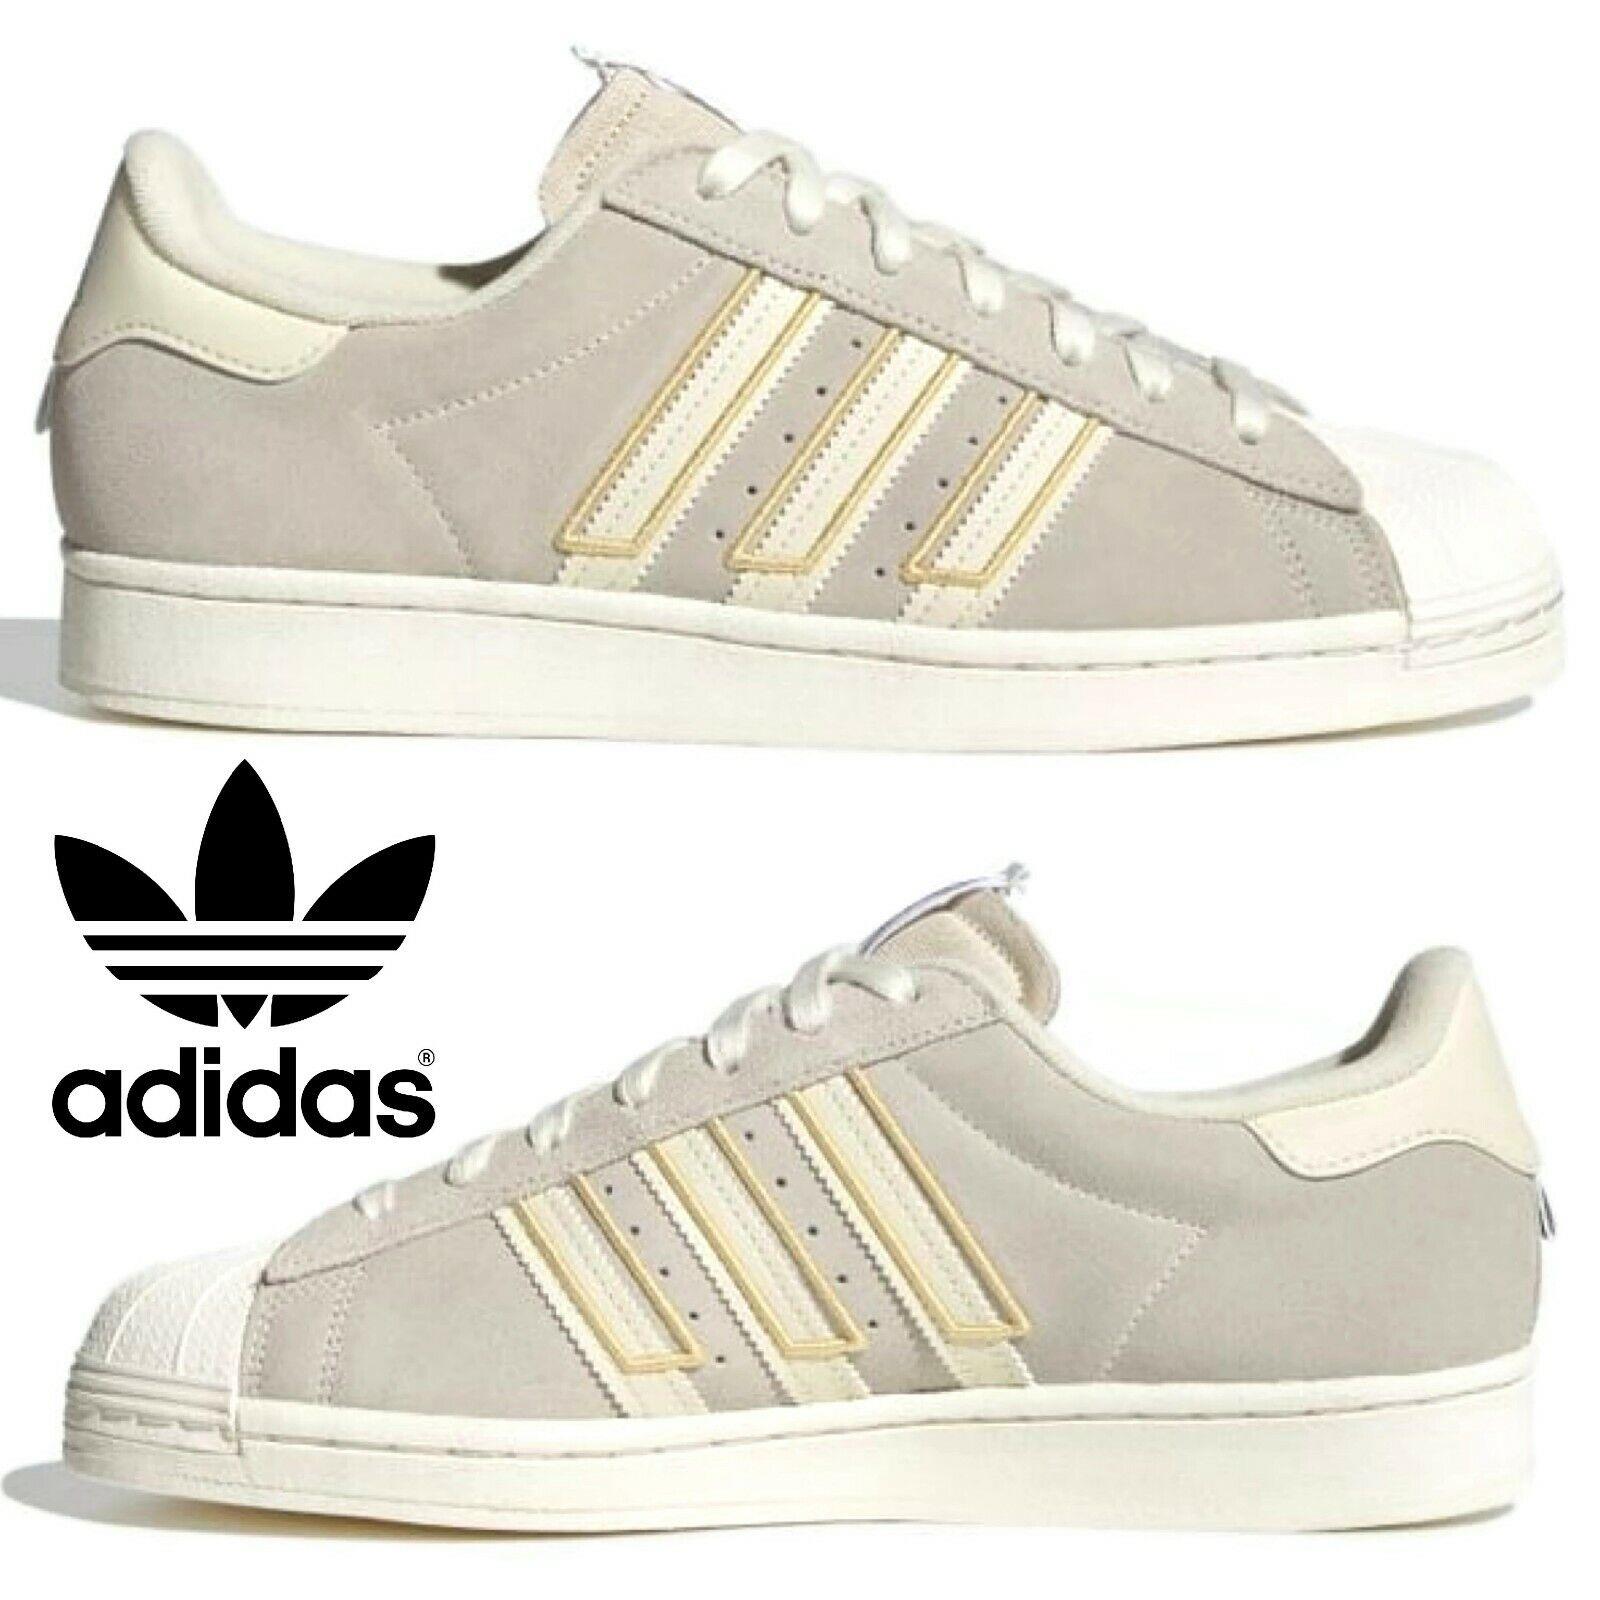 Adidas Originals Superstar Men`s Sneakers Comfort Sport Casual Shoes Off White